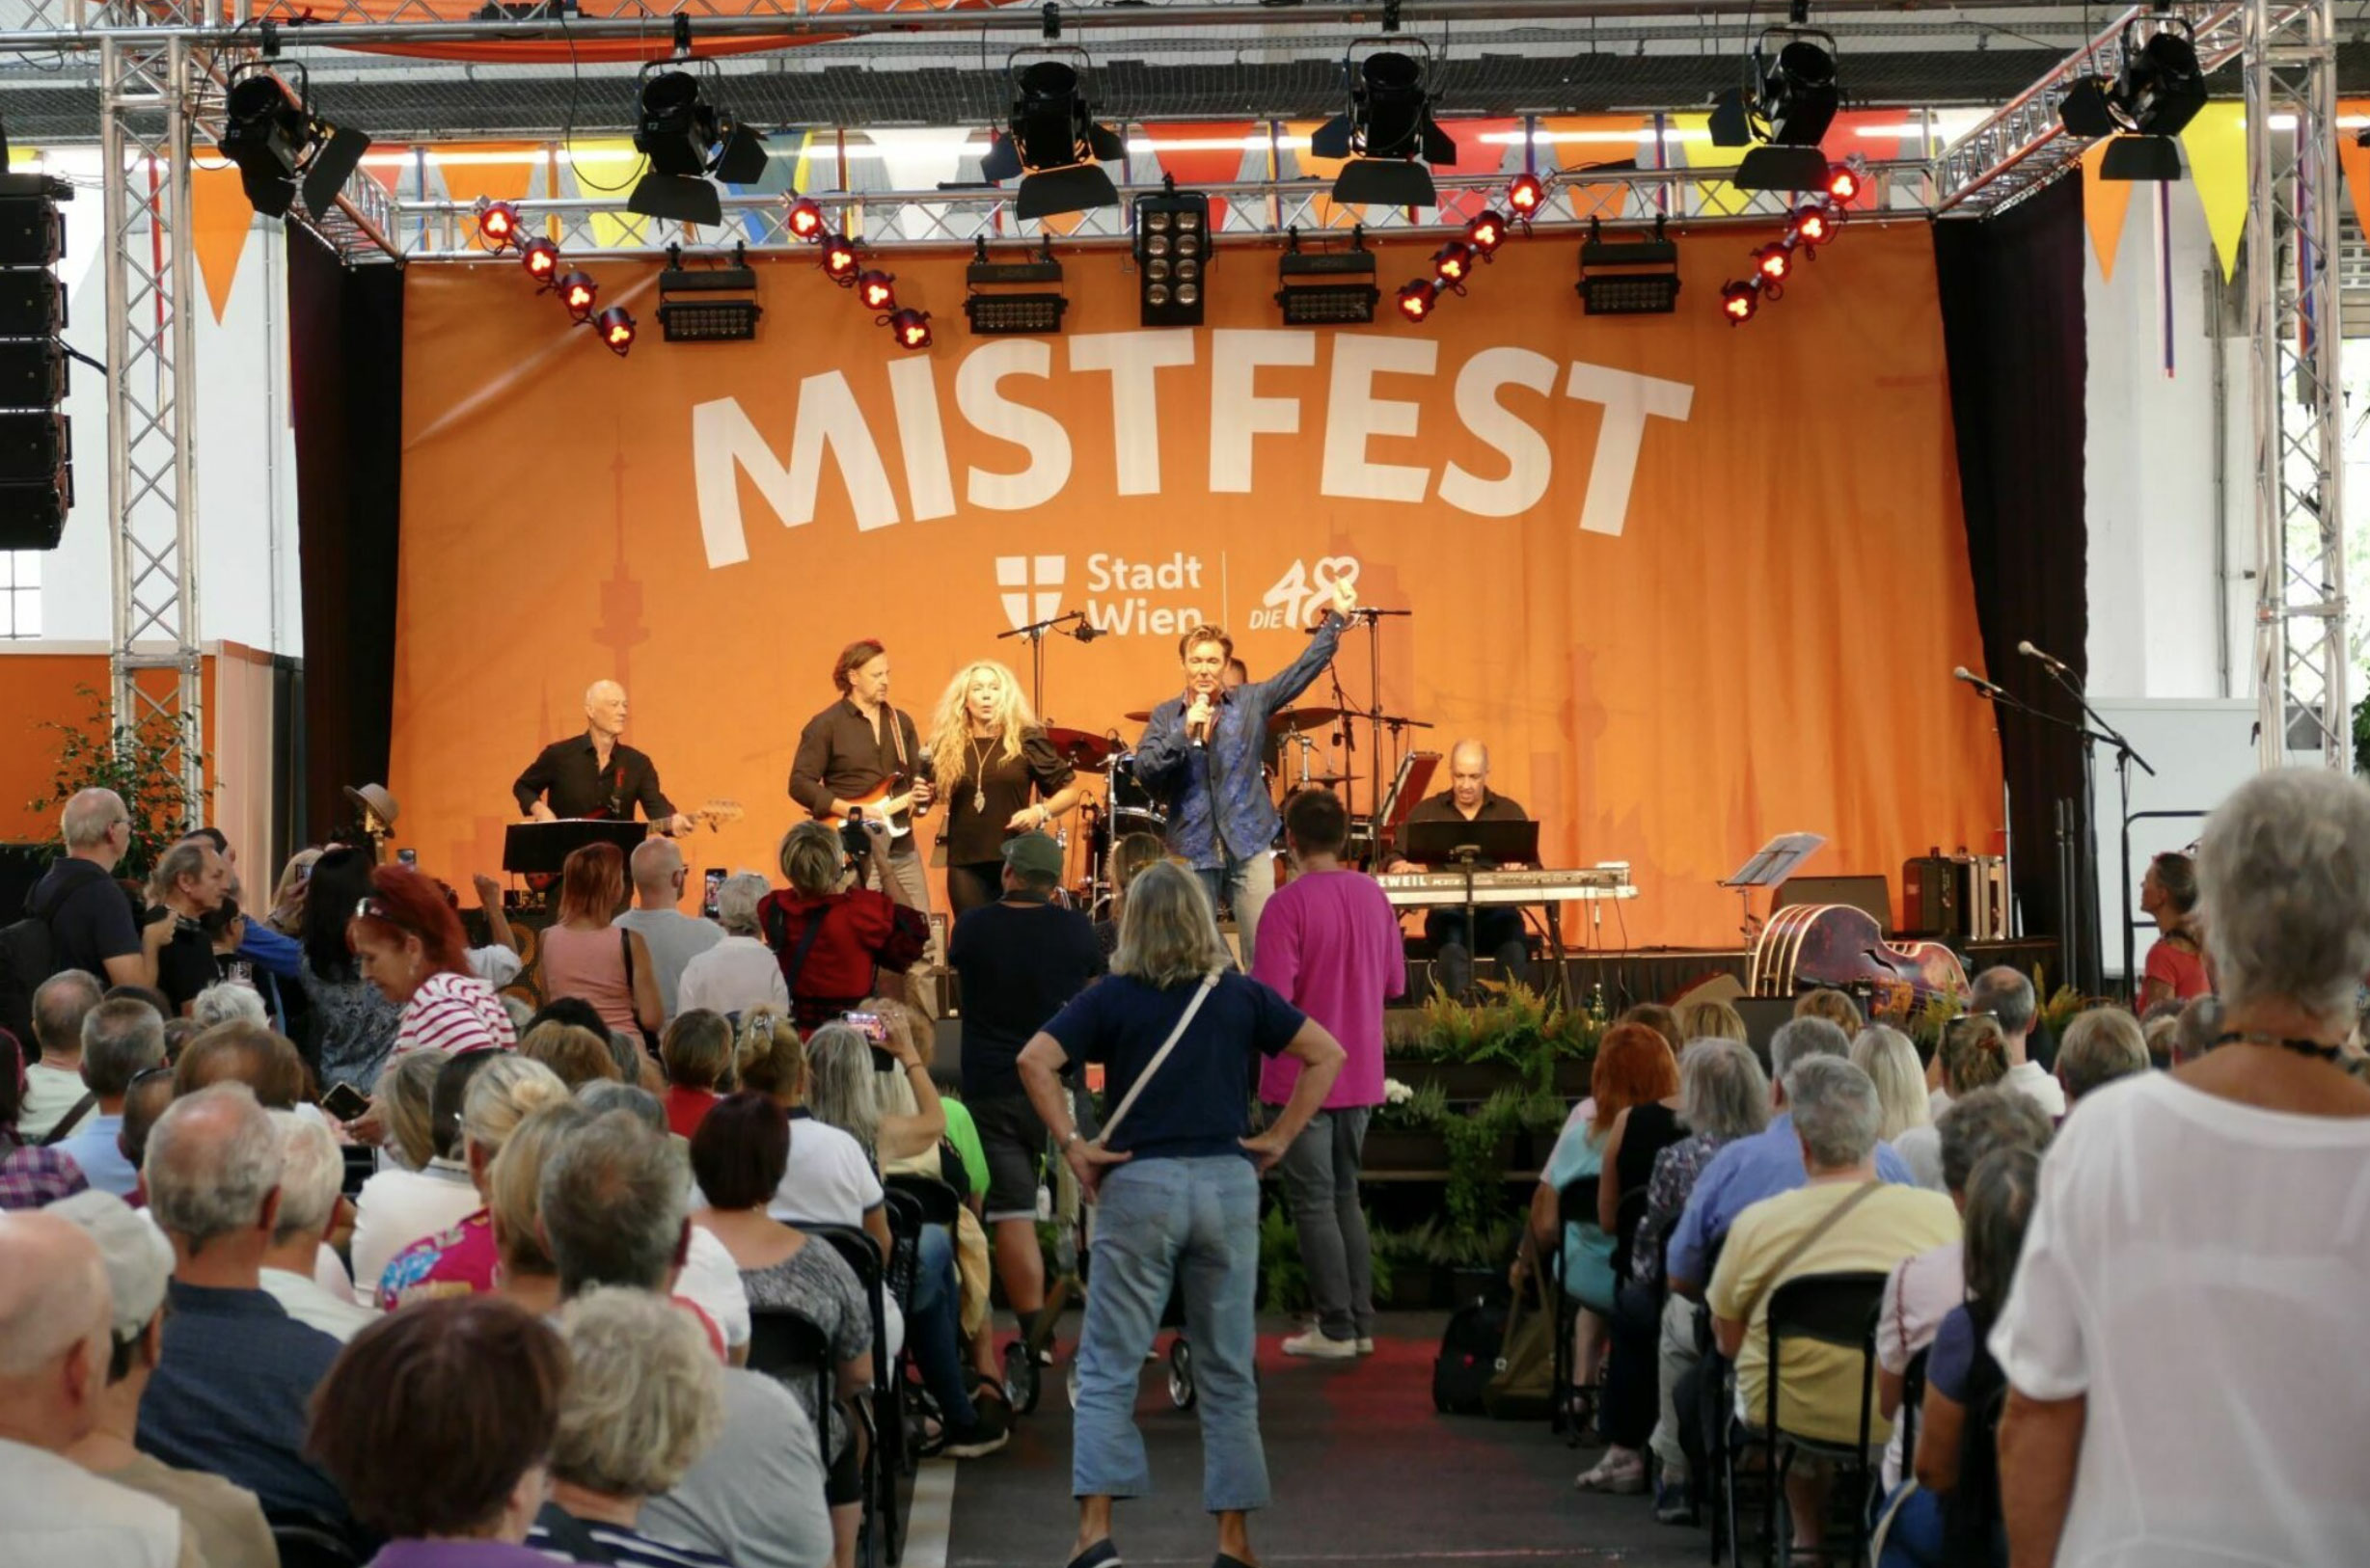 Mistfest